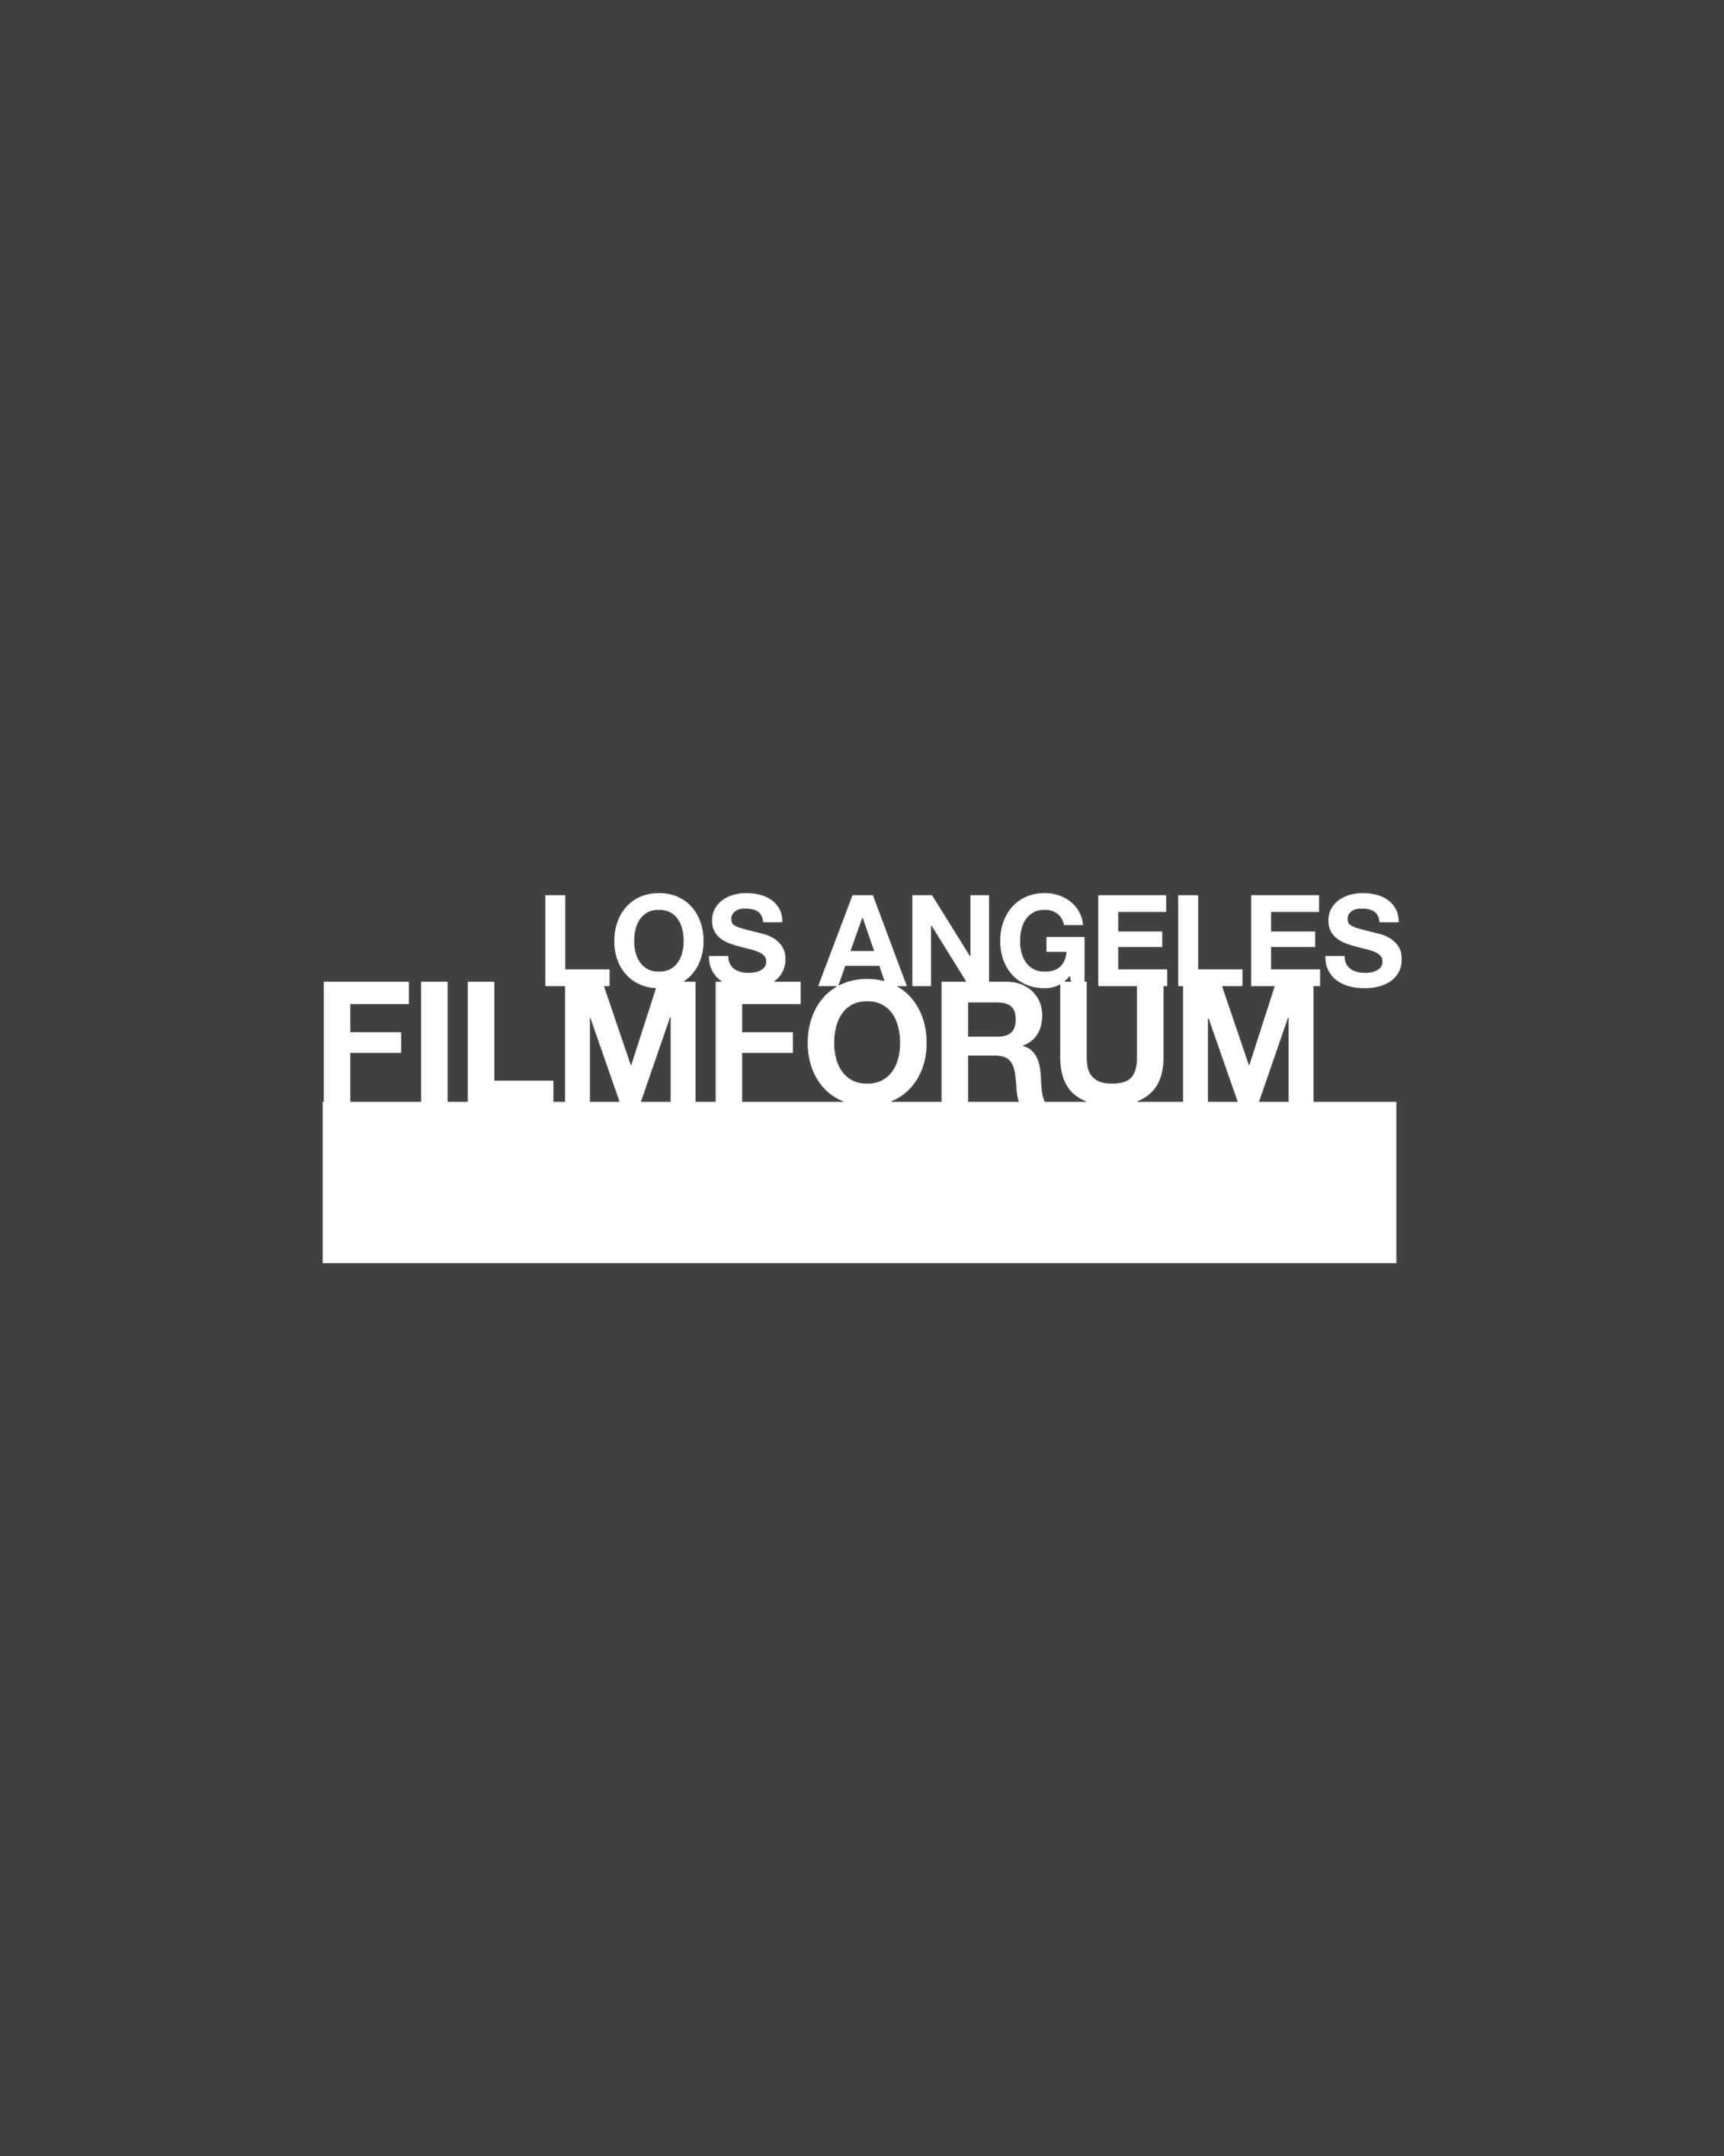 Logo text: "Los Angeles Film Forum"